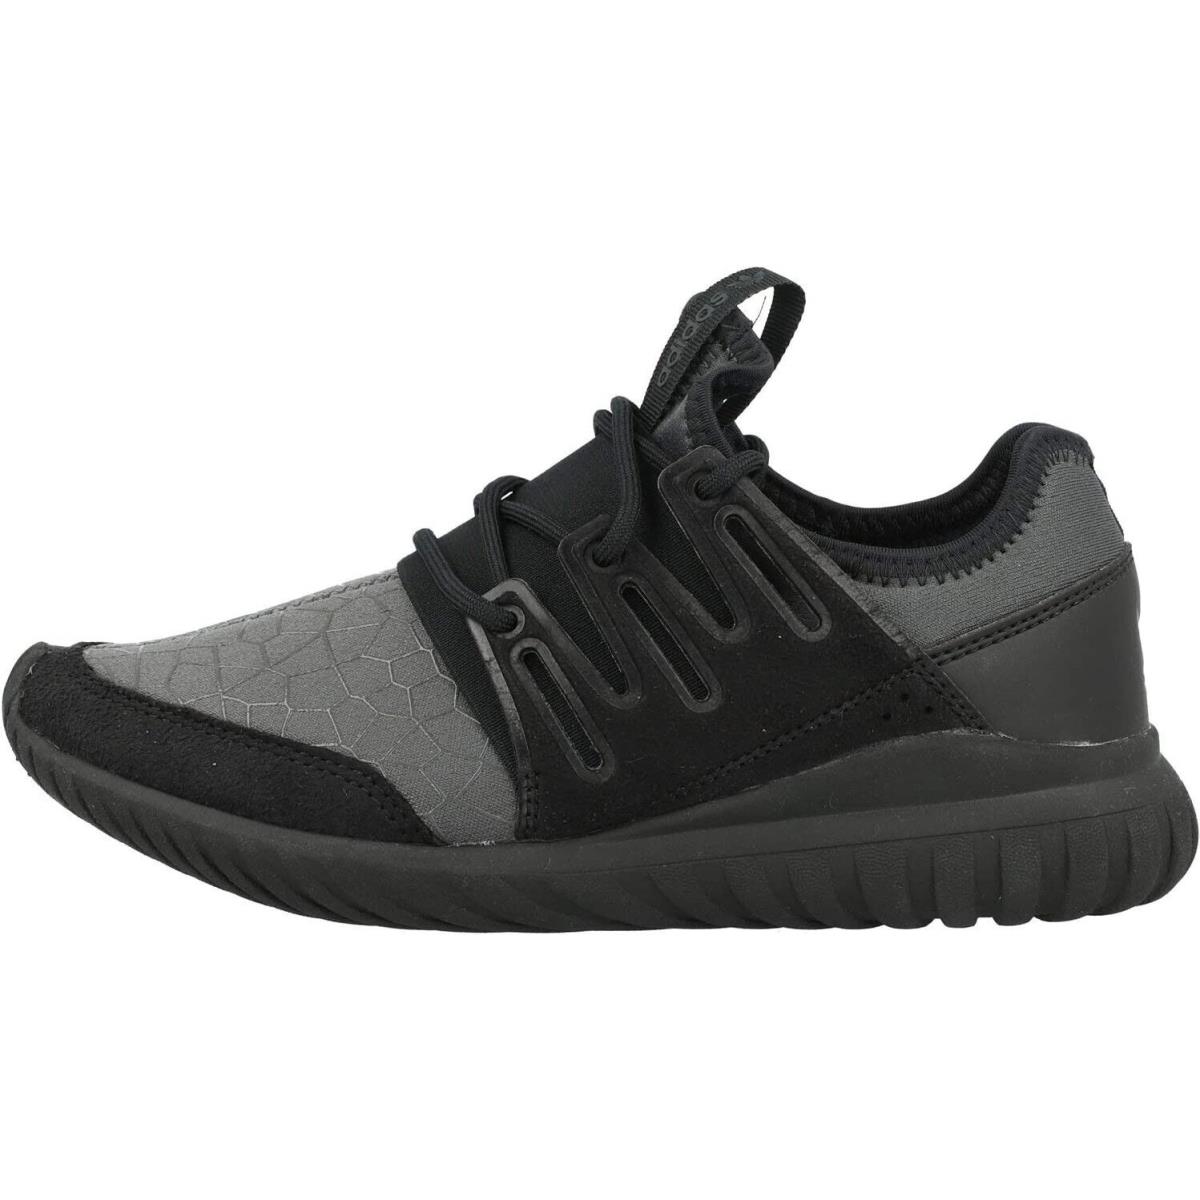 Adidas Tubular Radial S81919 Youth Grey/black Running Sneaker Shoes 3.5Y HS4141